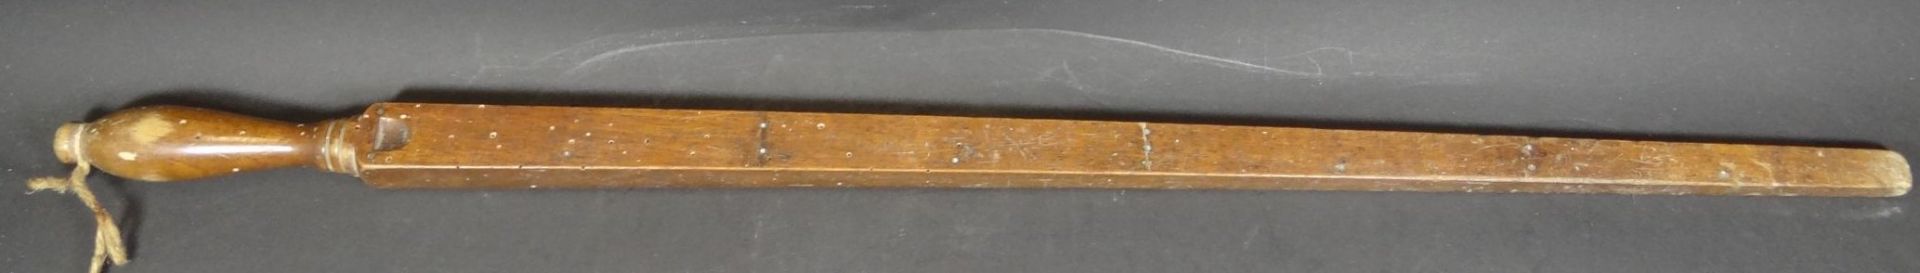 alte Holz-Elle, alter Wurmbefall, L-70 cm - Bild 3 aus 3